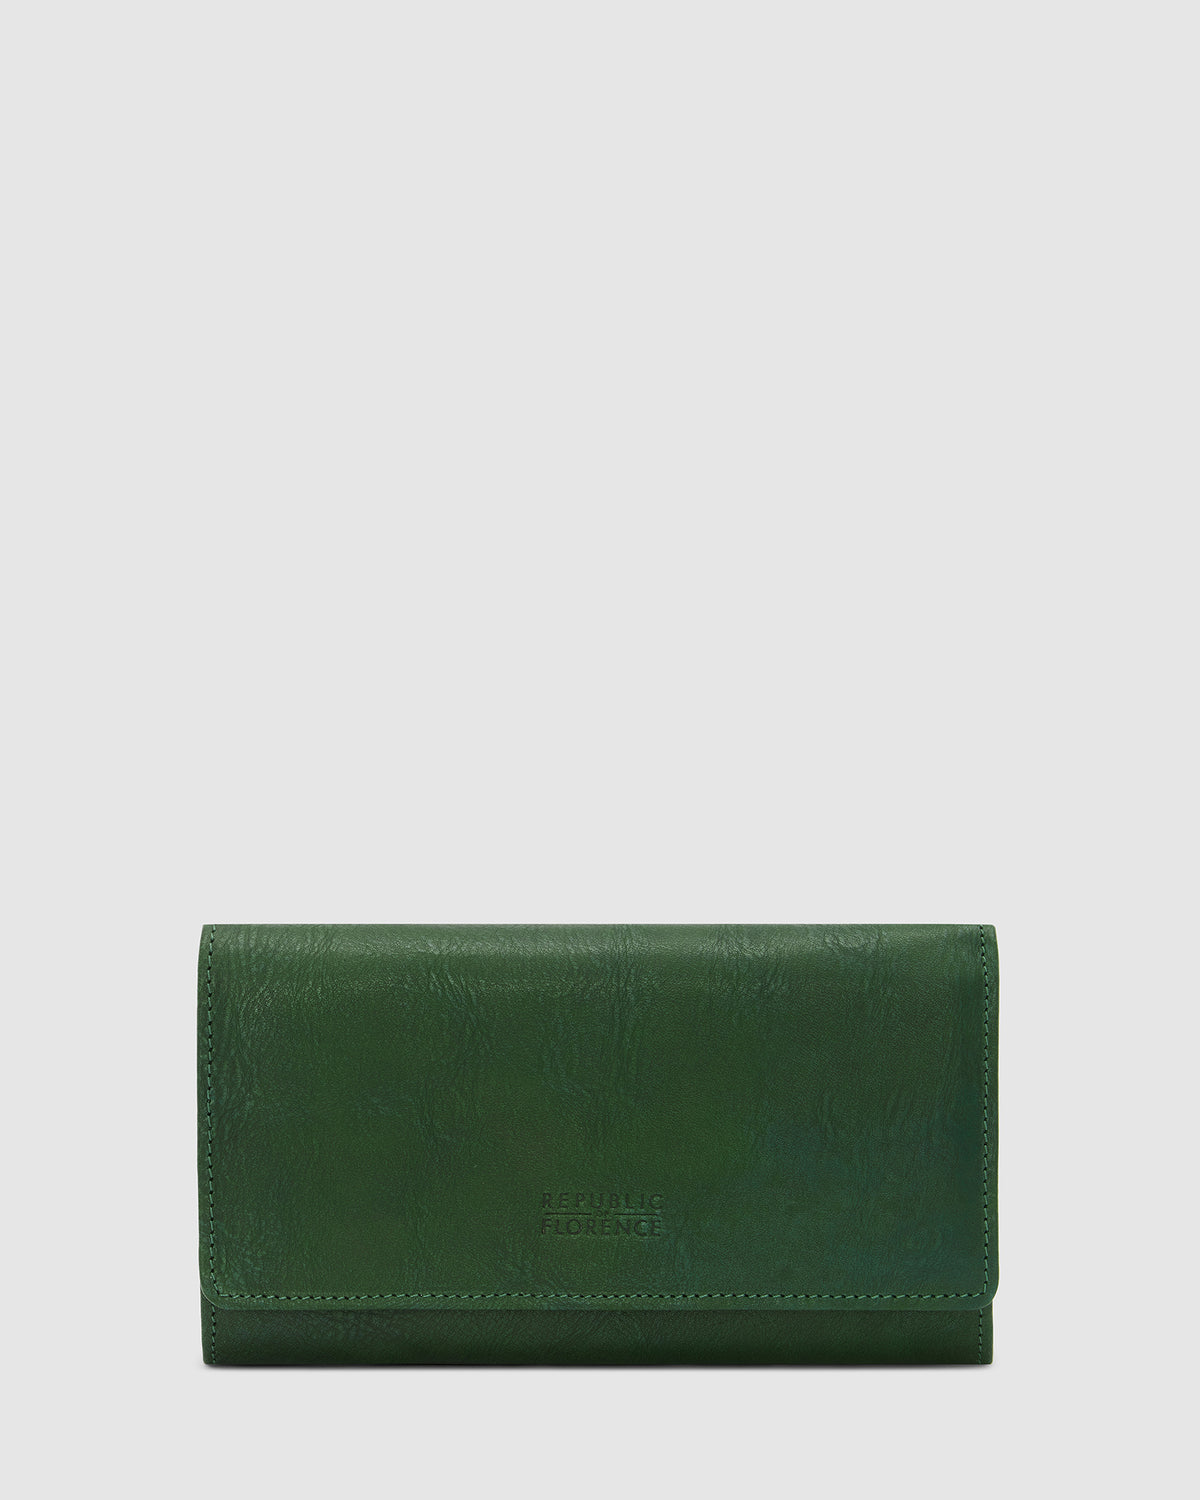 Green Hand-made Cowhide Leather Wallet Zipper Long Wallet